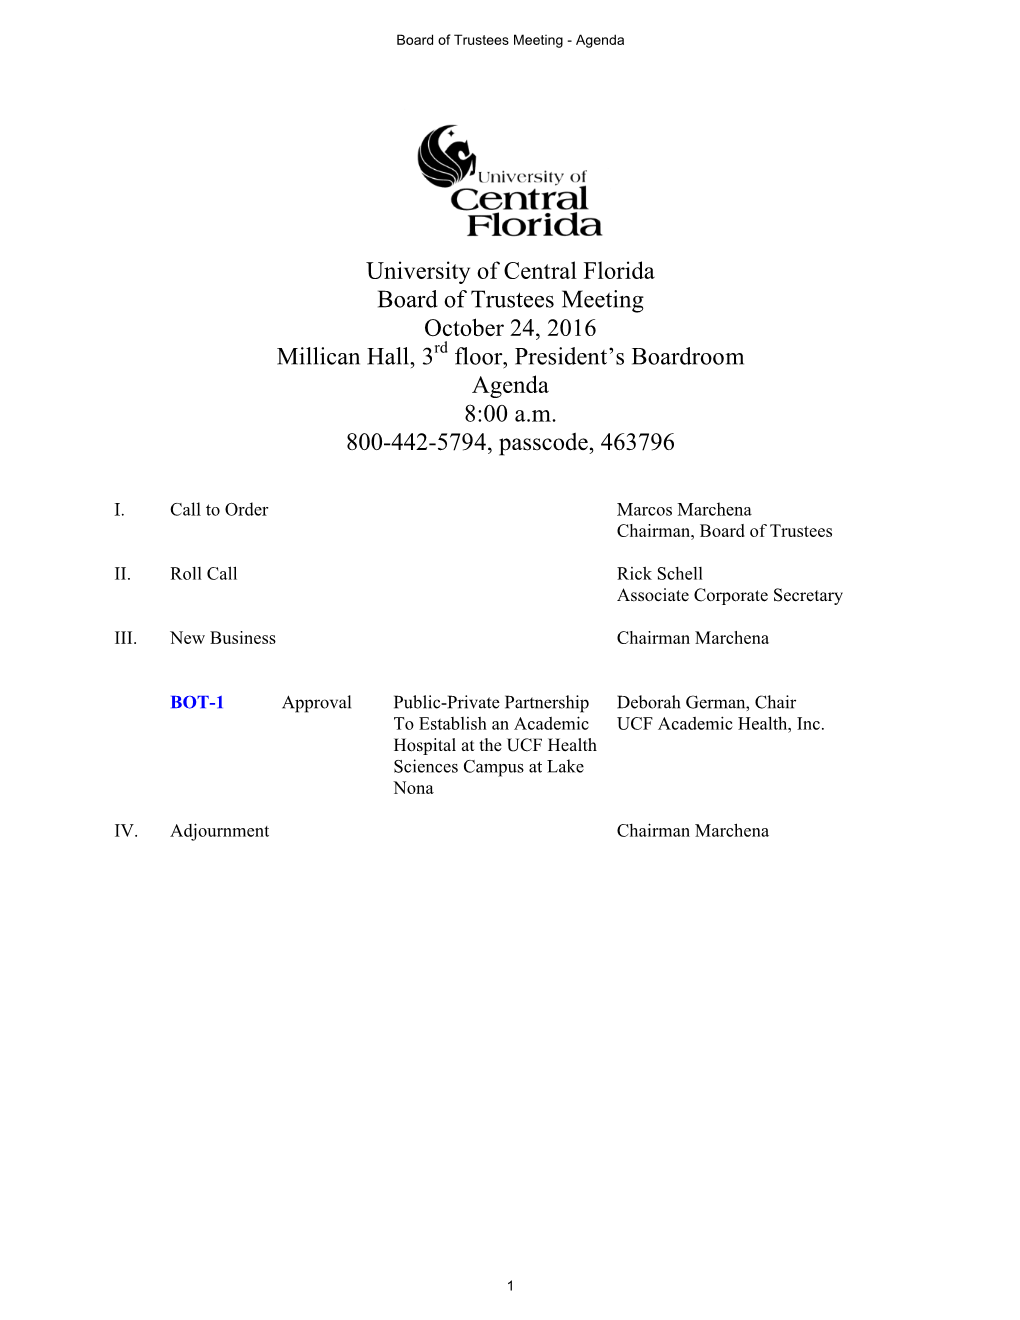 University of Central Florida Board of Trustees Meeting October 24, 2016 Millican Hall, 3Rd Floor, President’S Boardroom Agenda 8:00 A.M